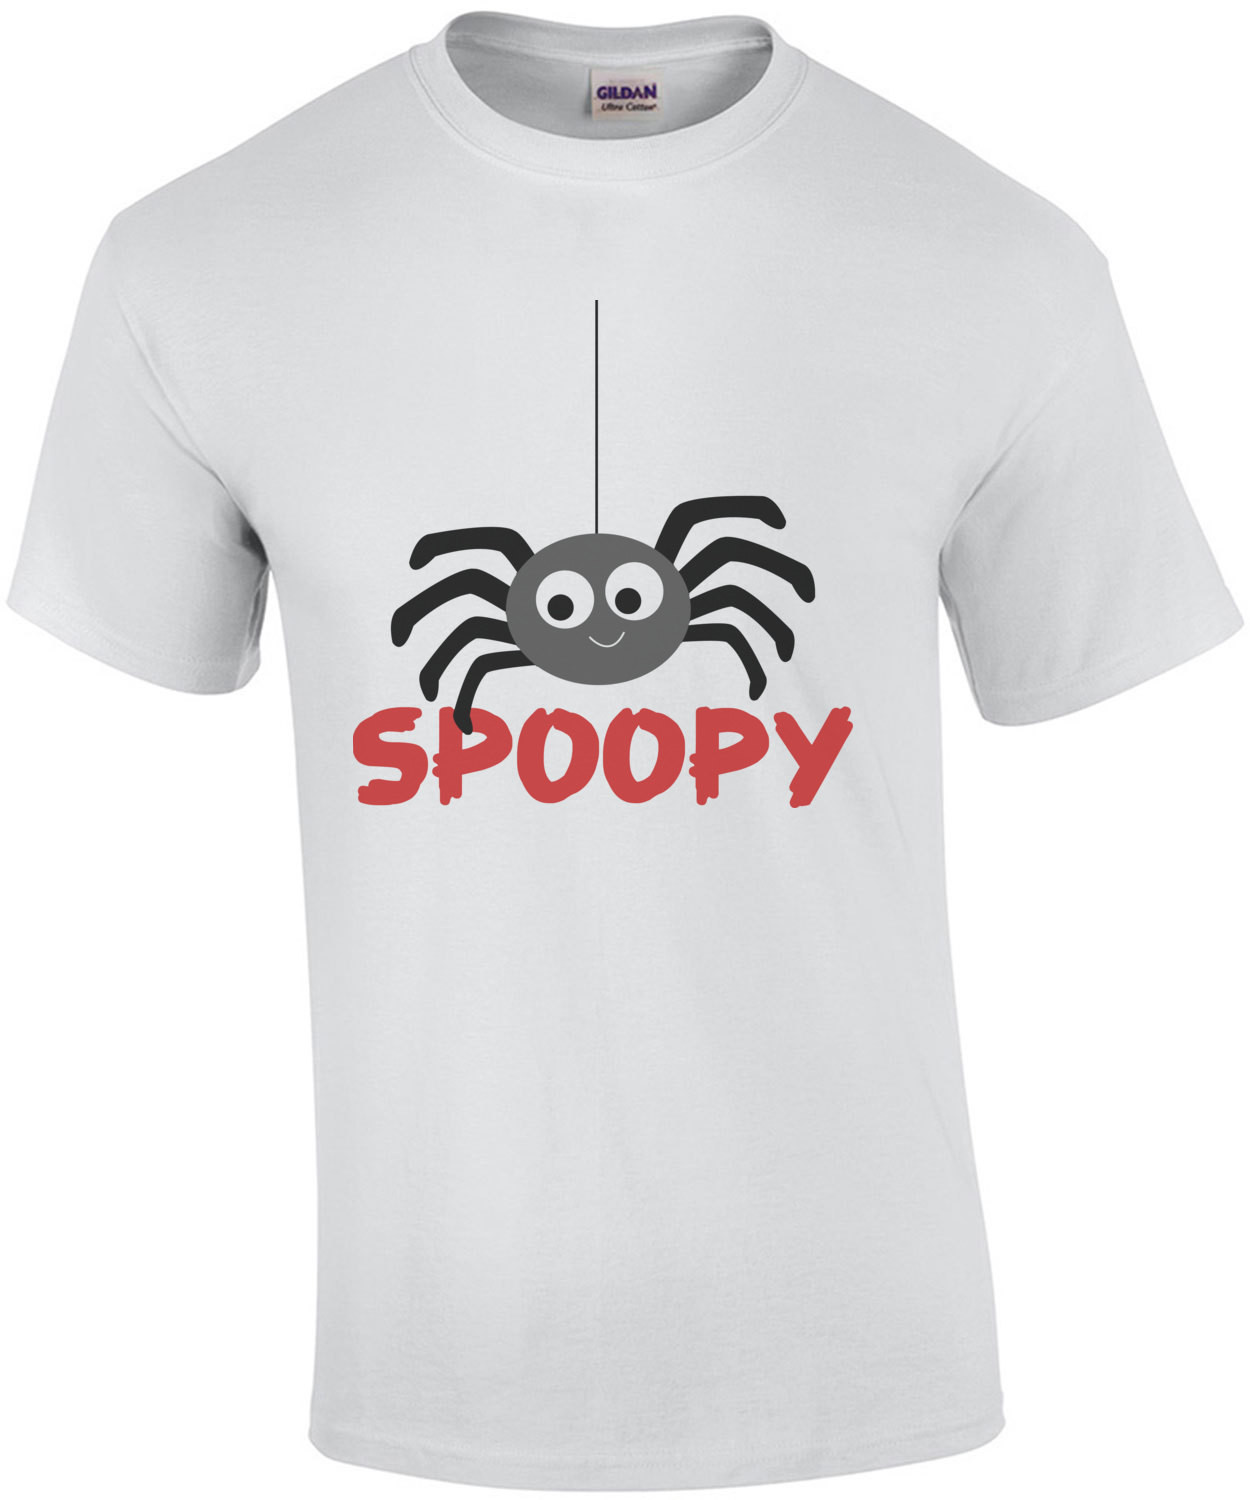 Spoopy Spider Halloween Shirt